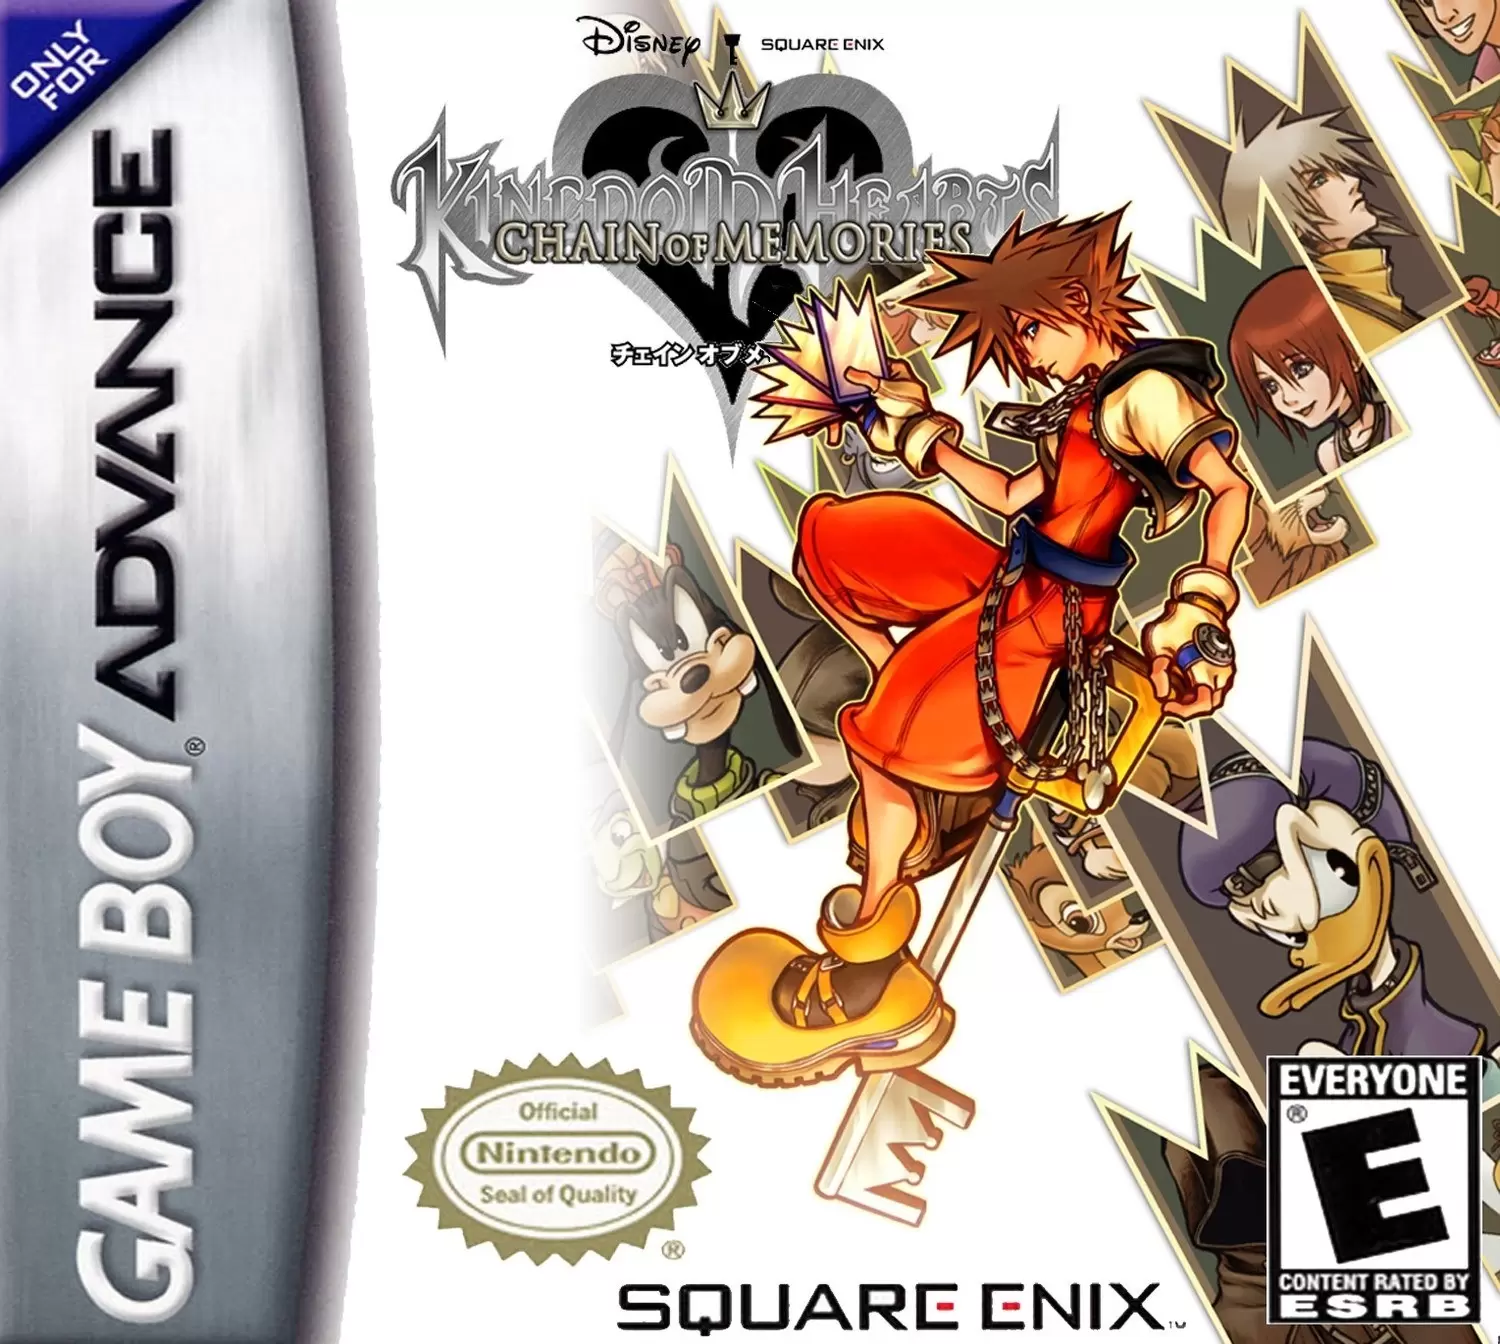 Game Boy Advance Games - Kingdom Hearts: Chain of Memories